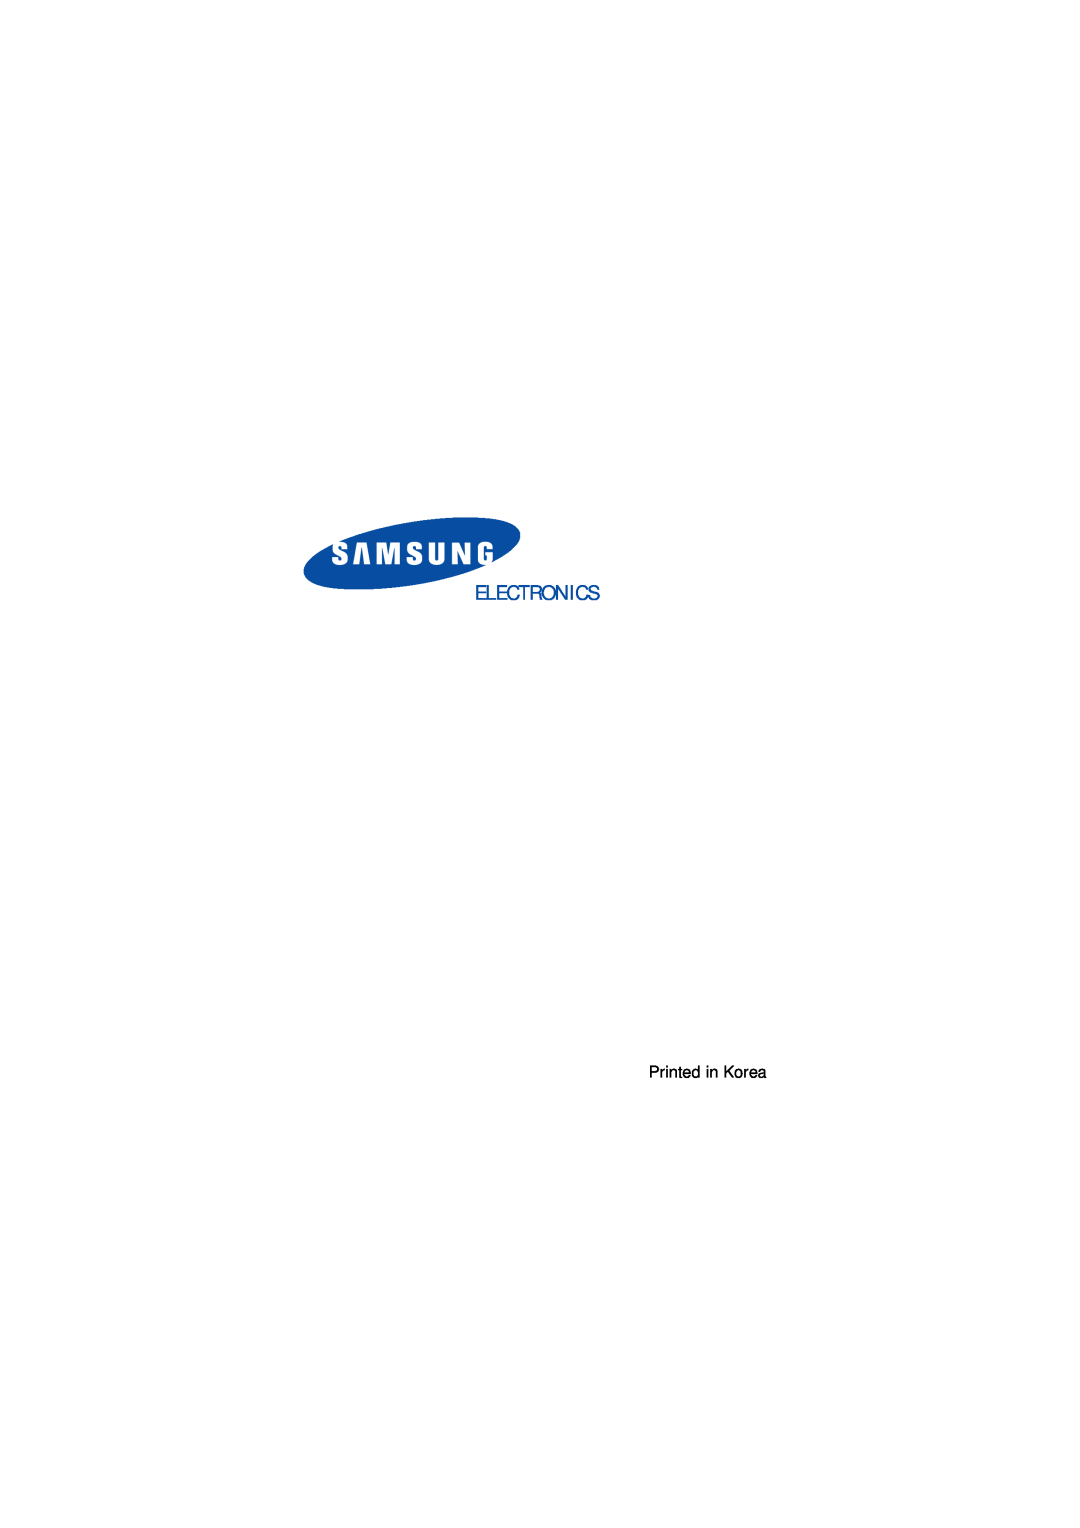 Samsung CE2913T, CE2933T manual Electronics, Printed in Korea 